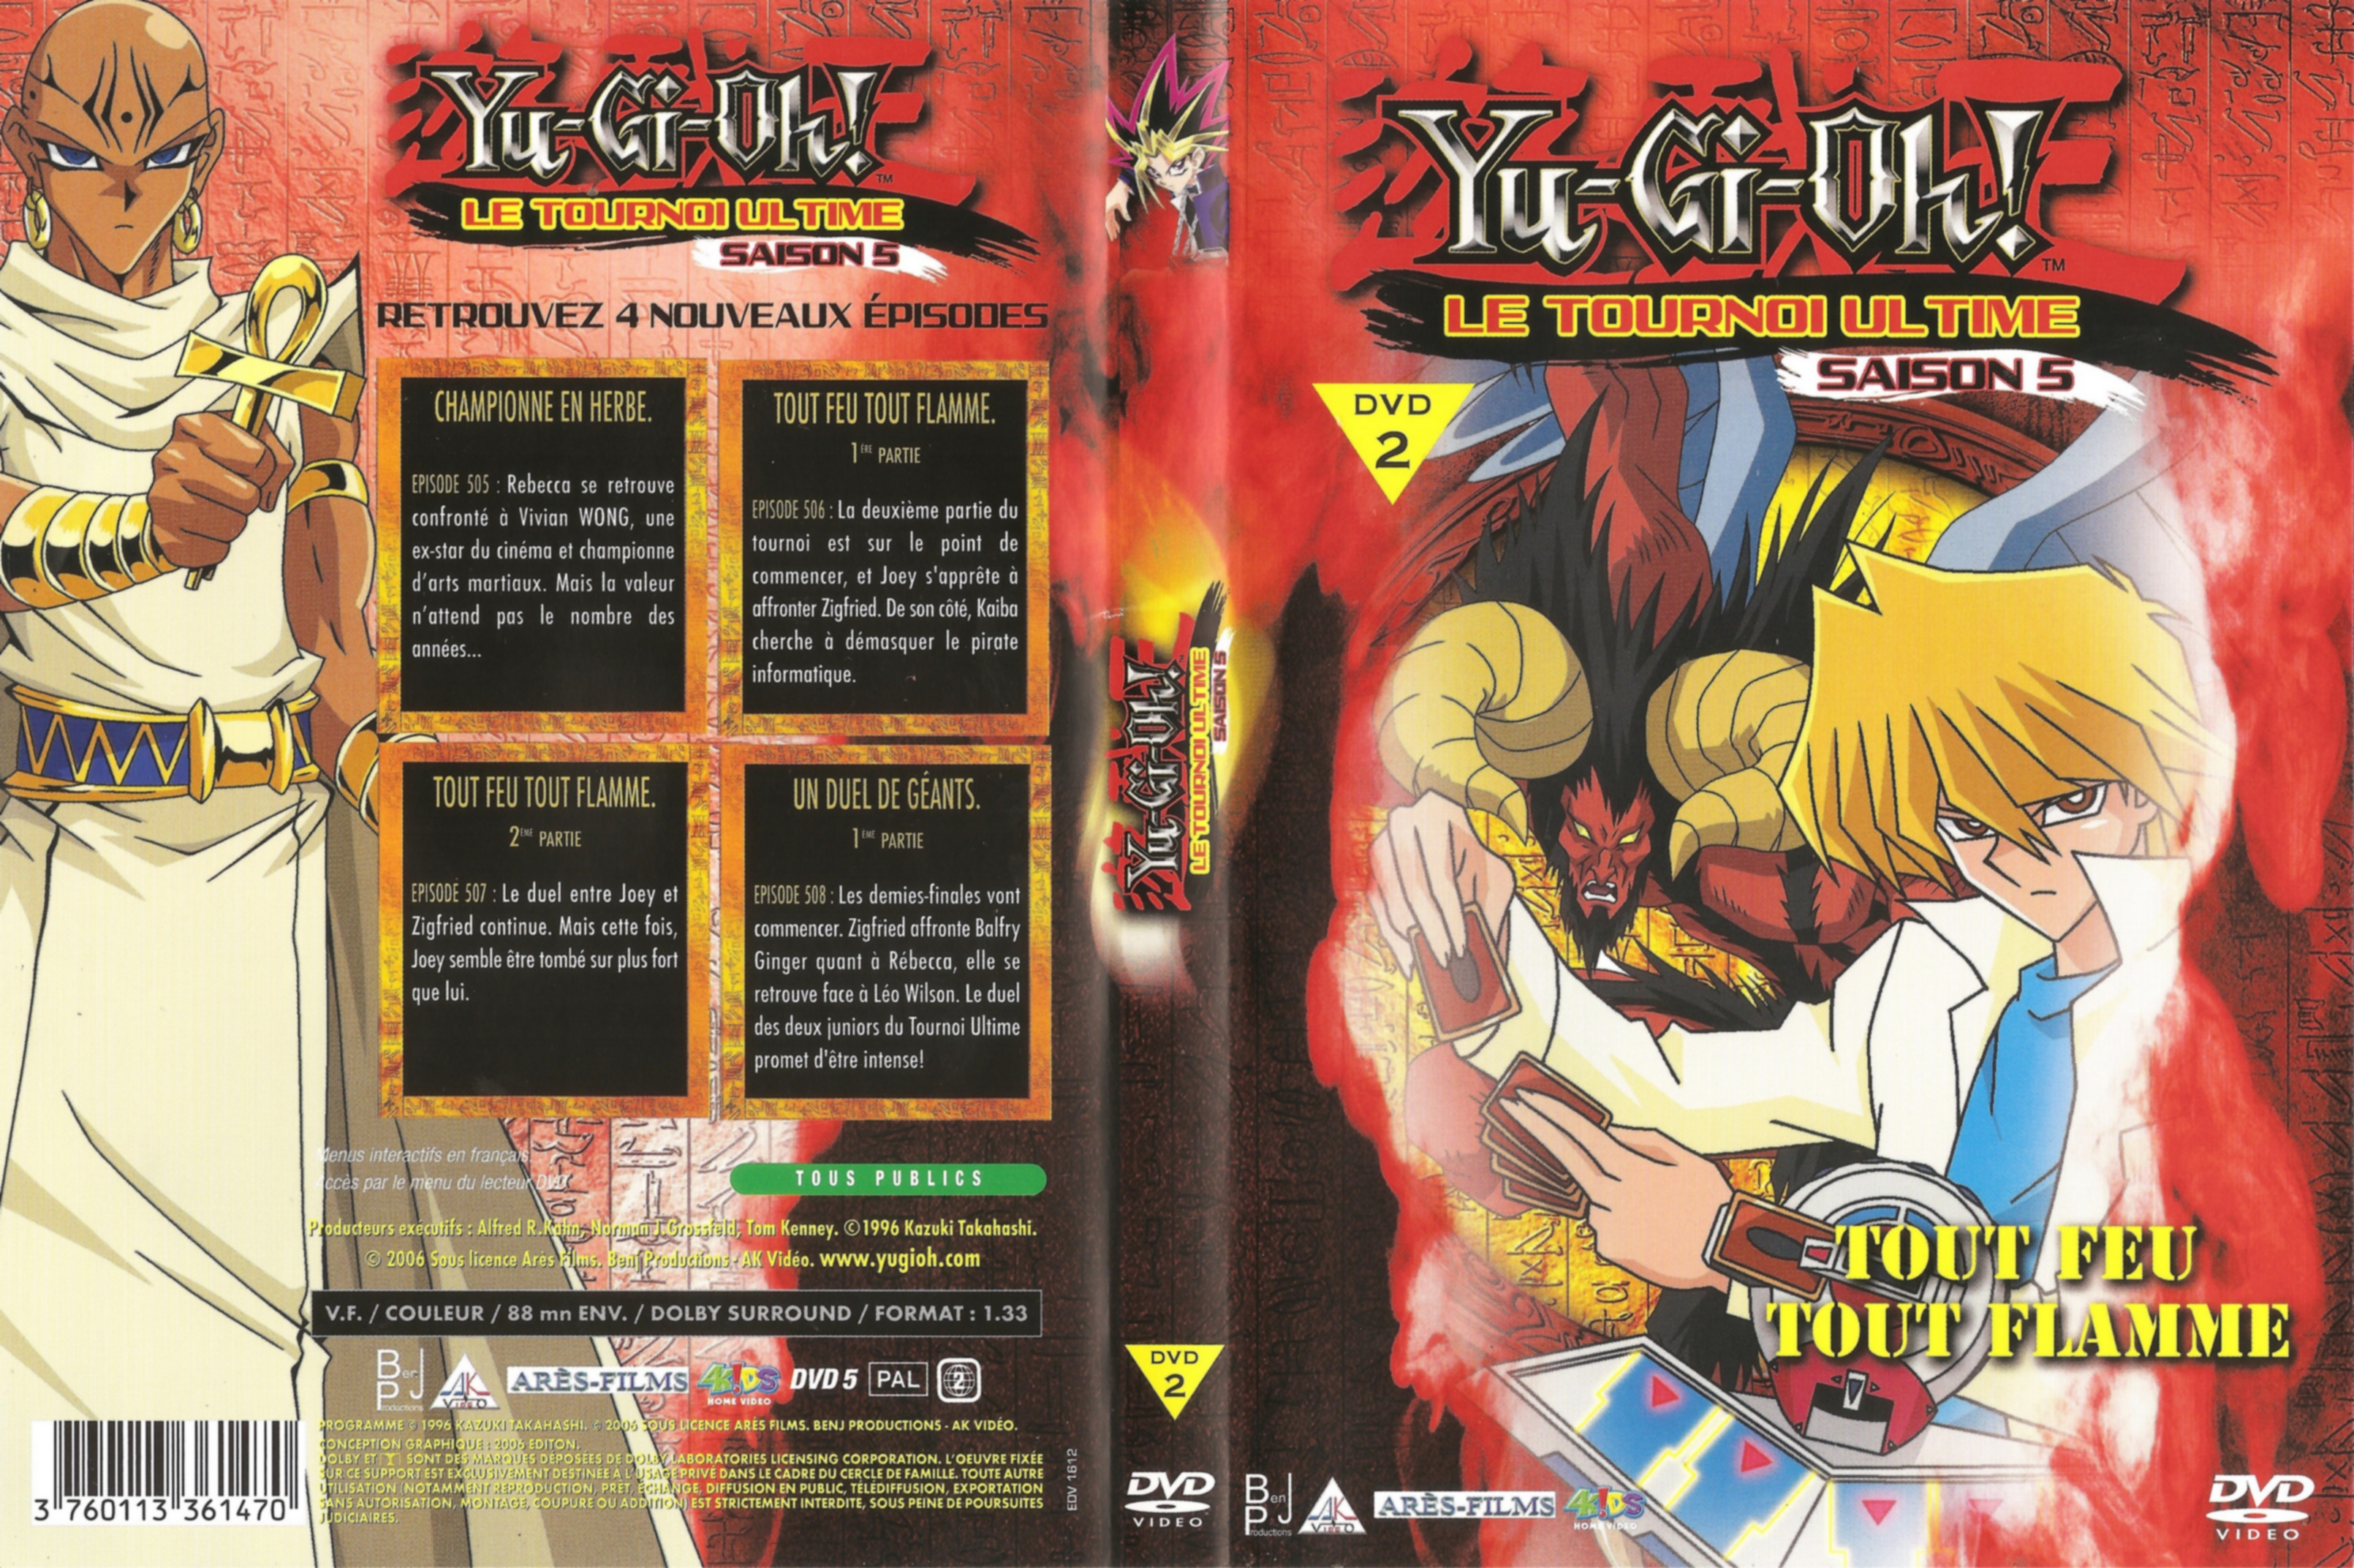 Jaquette DVD Yu-gi-oh! Saison 5 vol 2